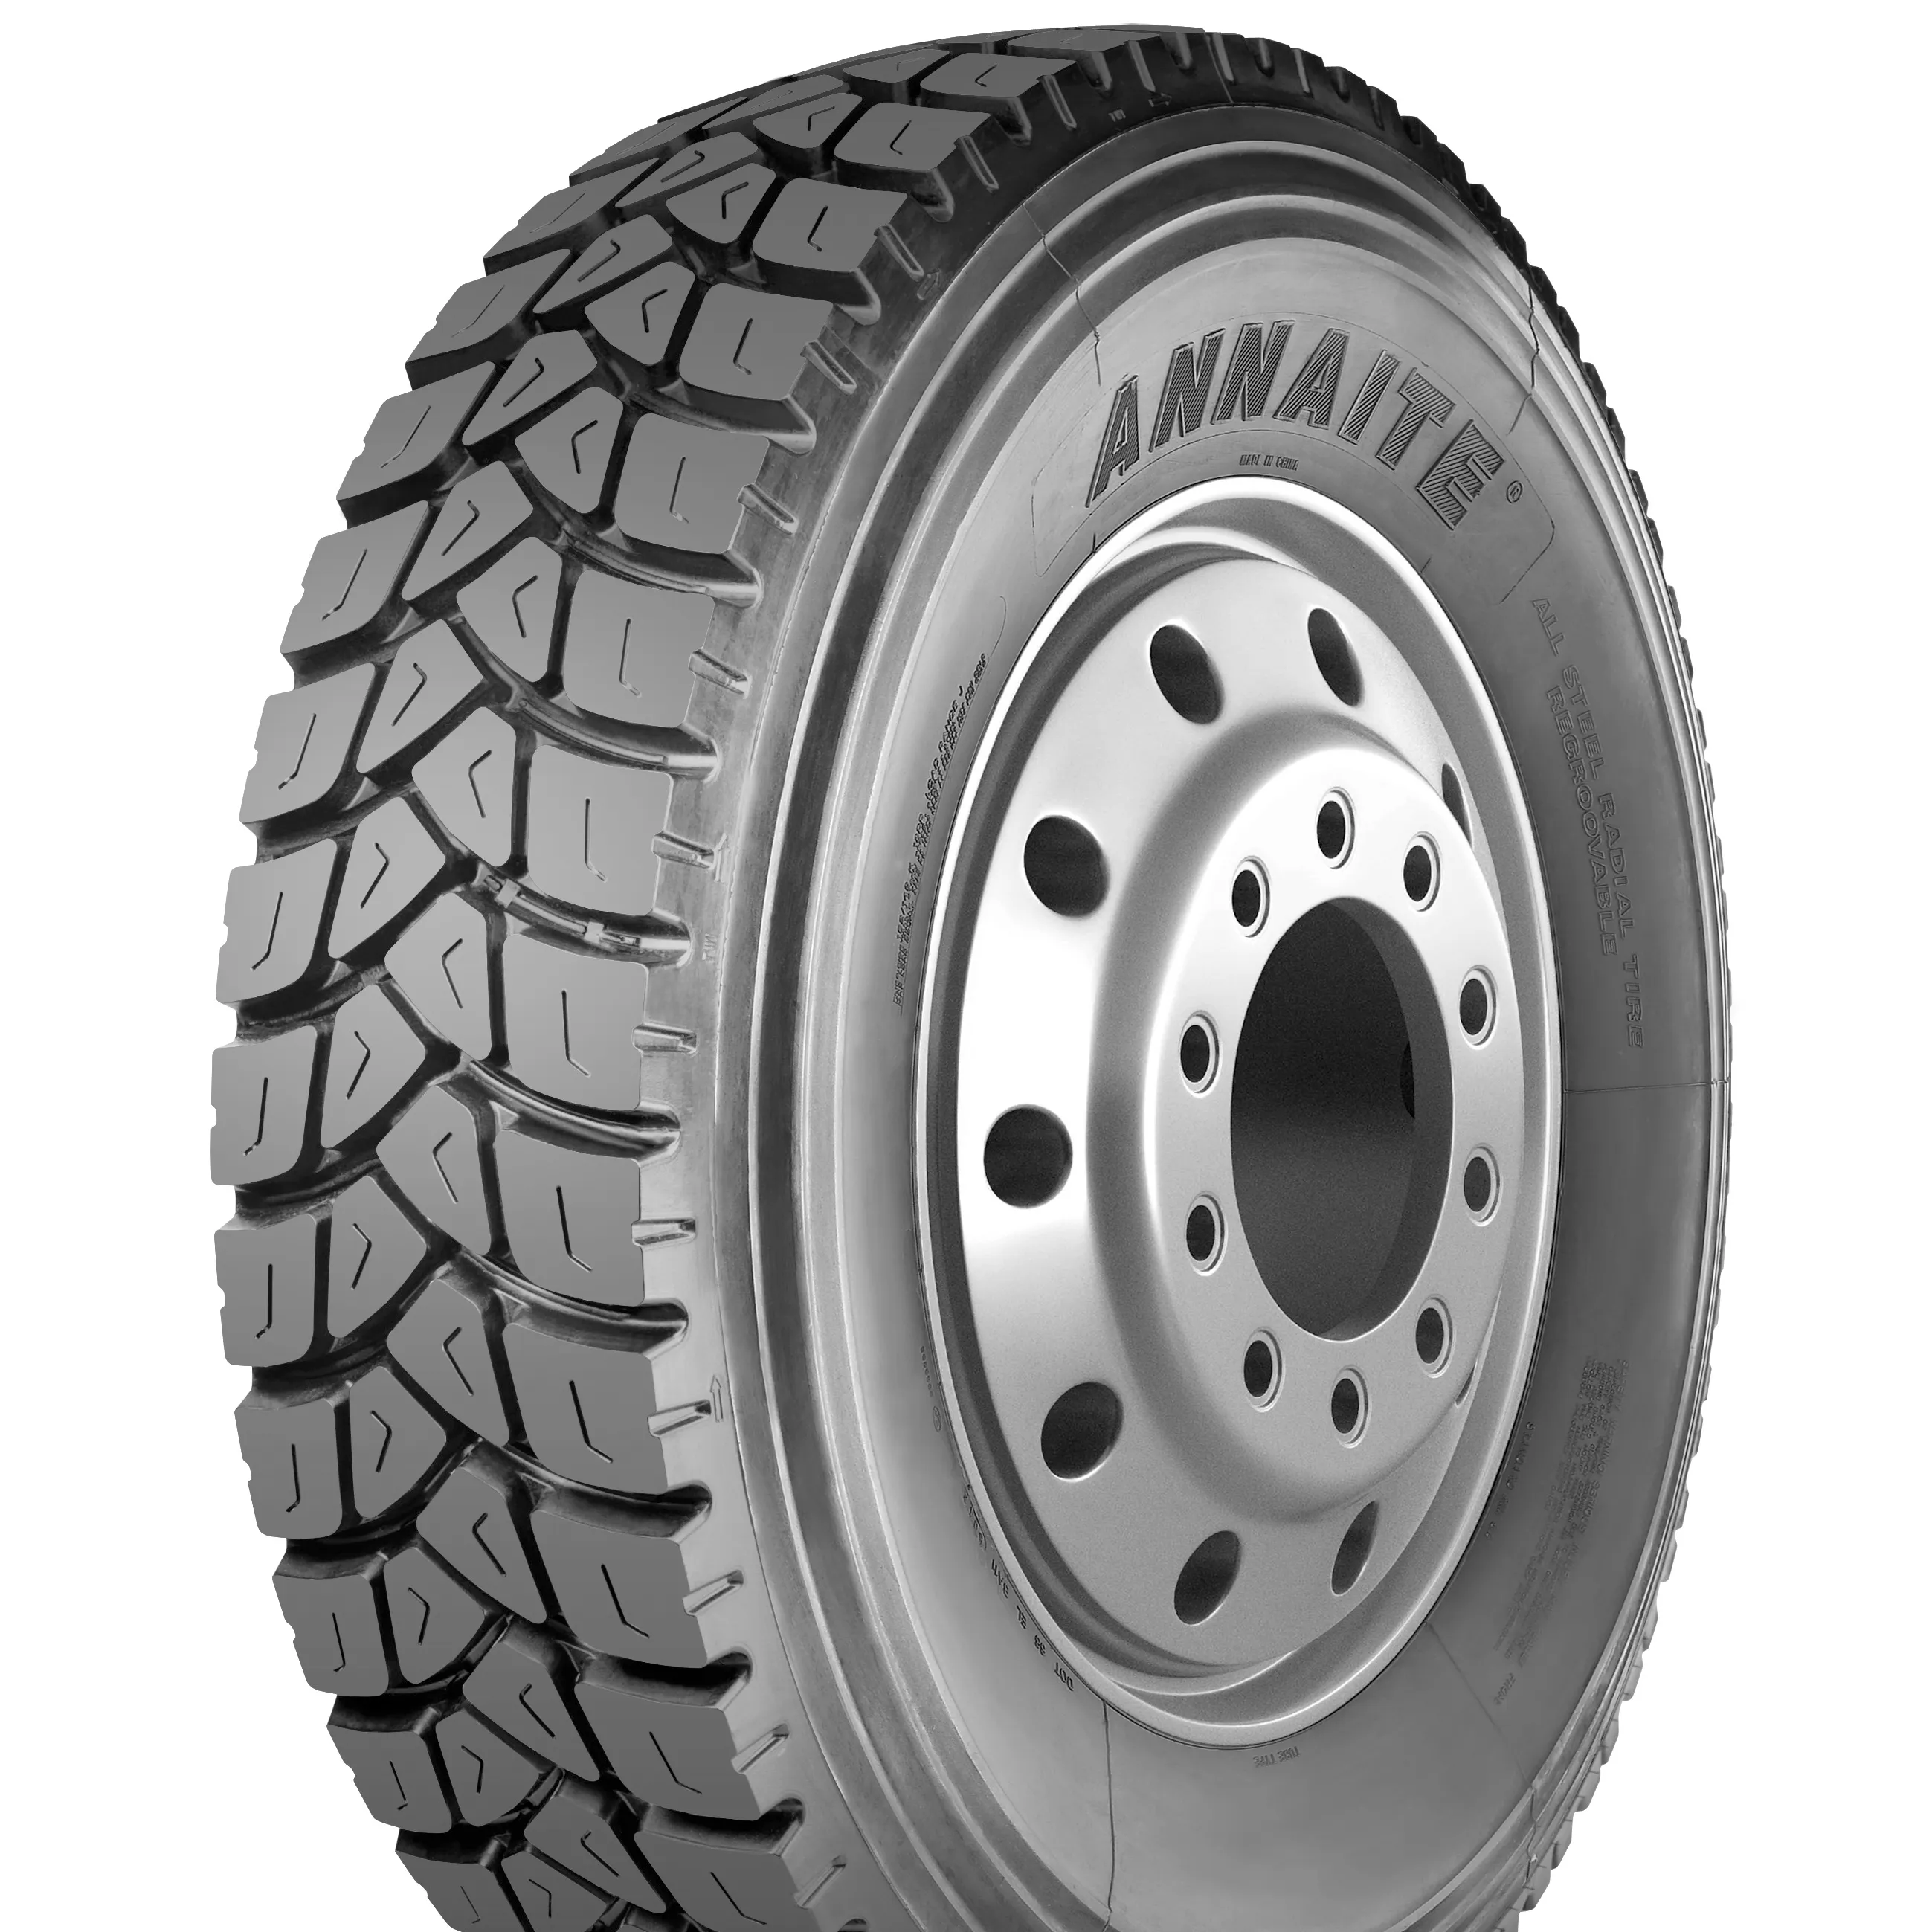 Vari tipi di pneumatici per auto/camion/furgoni/trattori usati di qualità pneumatici usati all'ingrosso nuovissimi pneumatici per auto di tutte le dimensioni